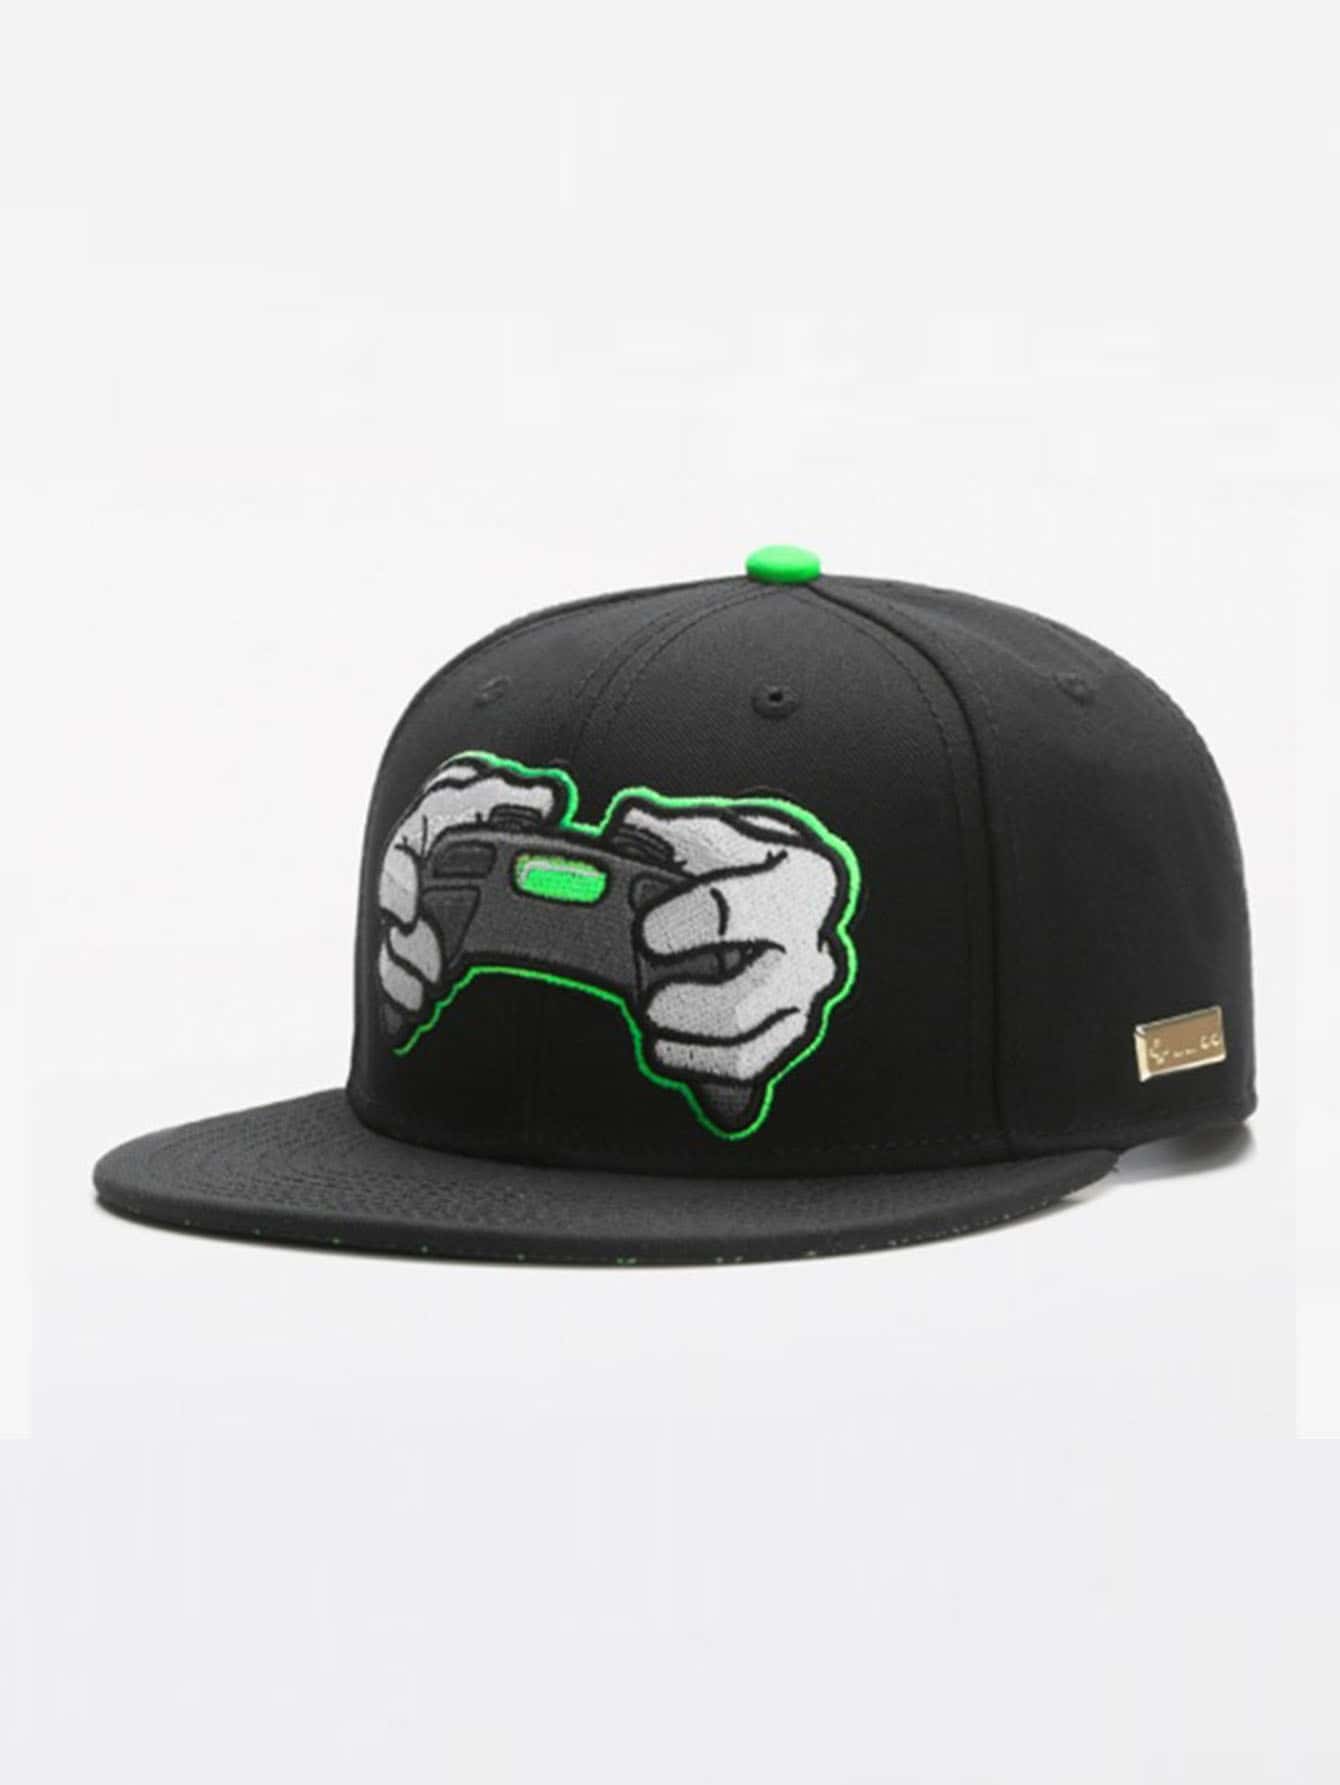 Men's Electronic Game Controller Headwear Baseball Snapback Cap Hat 💜